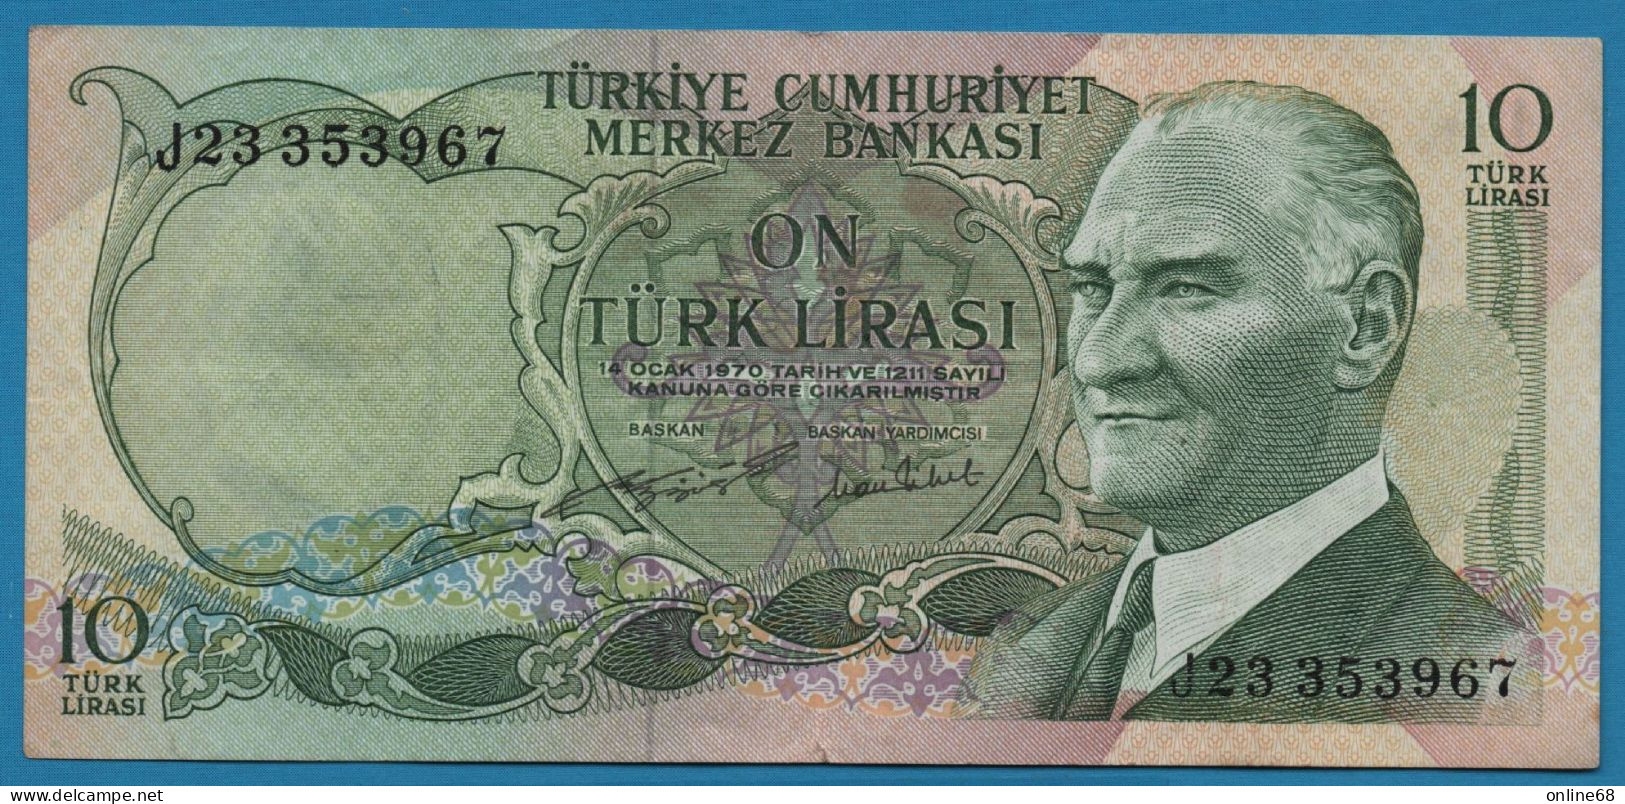 TURKEY 10 LIRASI L. 1970 # J23 353967 P# 186 Atatürk - Turquie